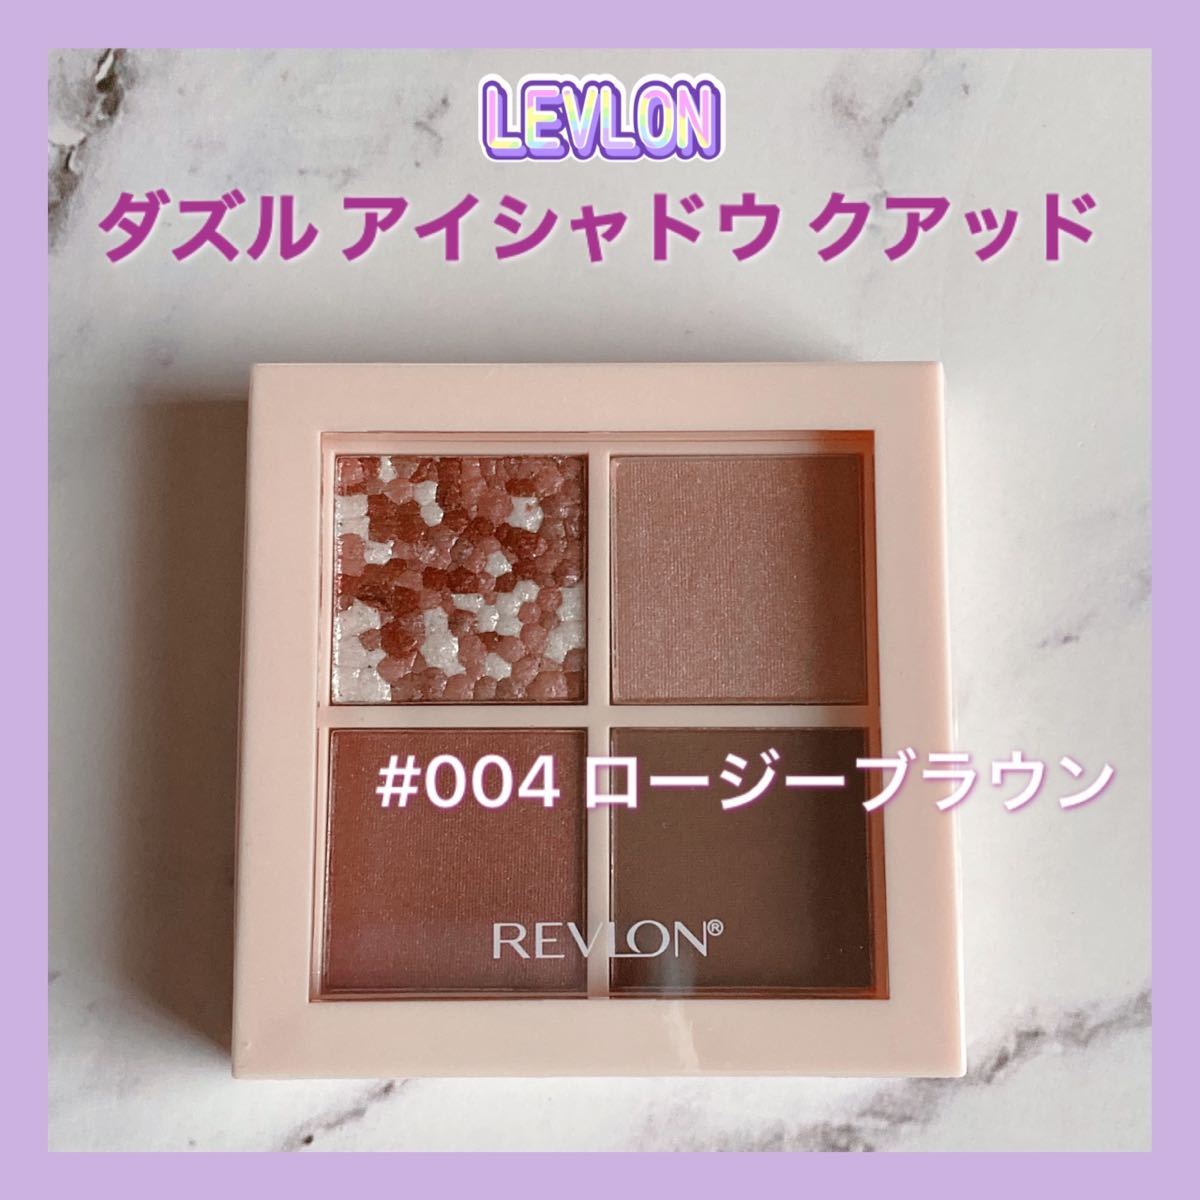  бесплатная доставка #004 Revlon dazru тени для век Quad low ji- Brown bru мехи 4 цвет Palette 